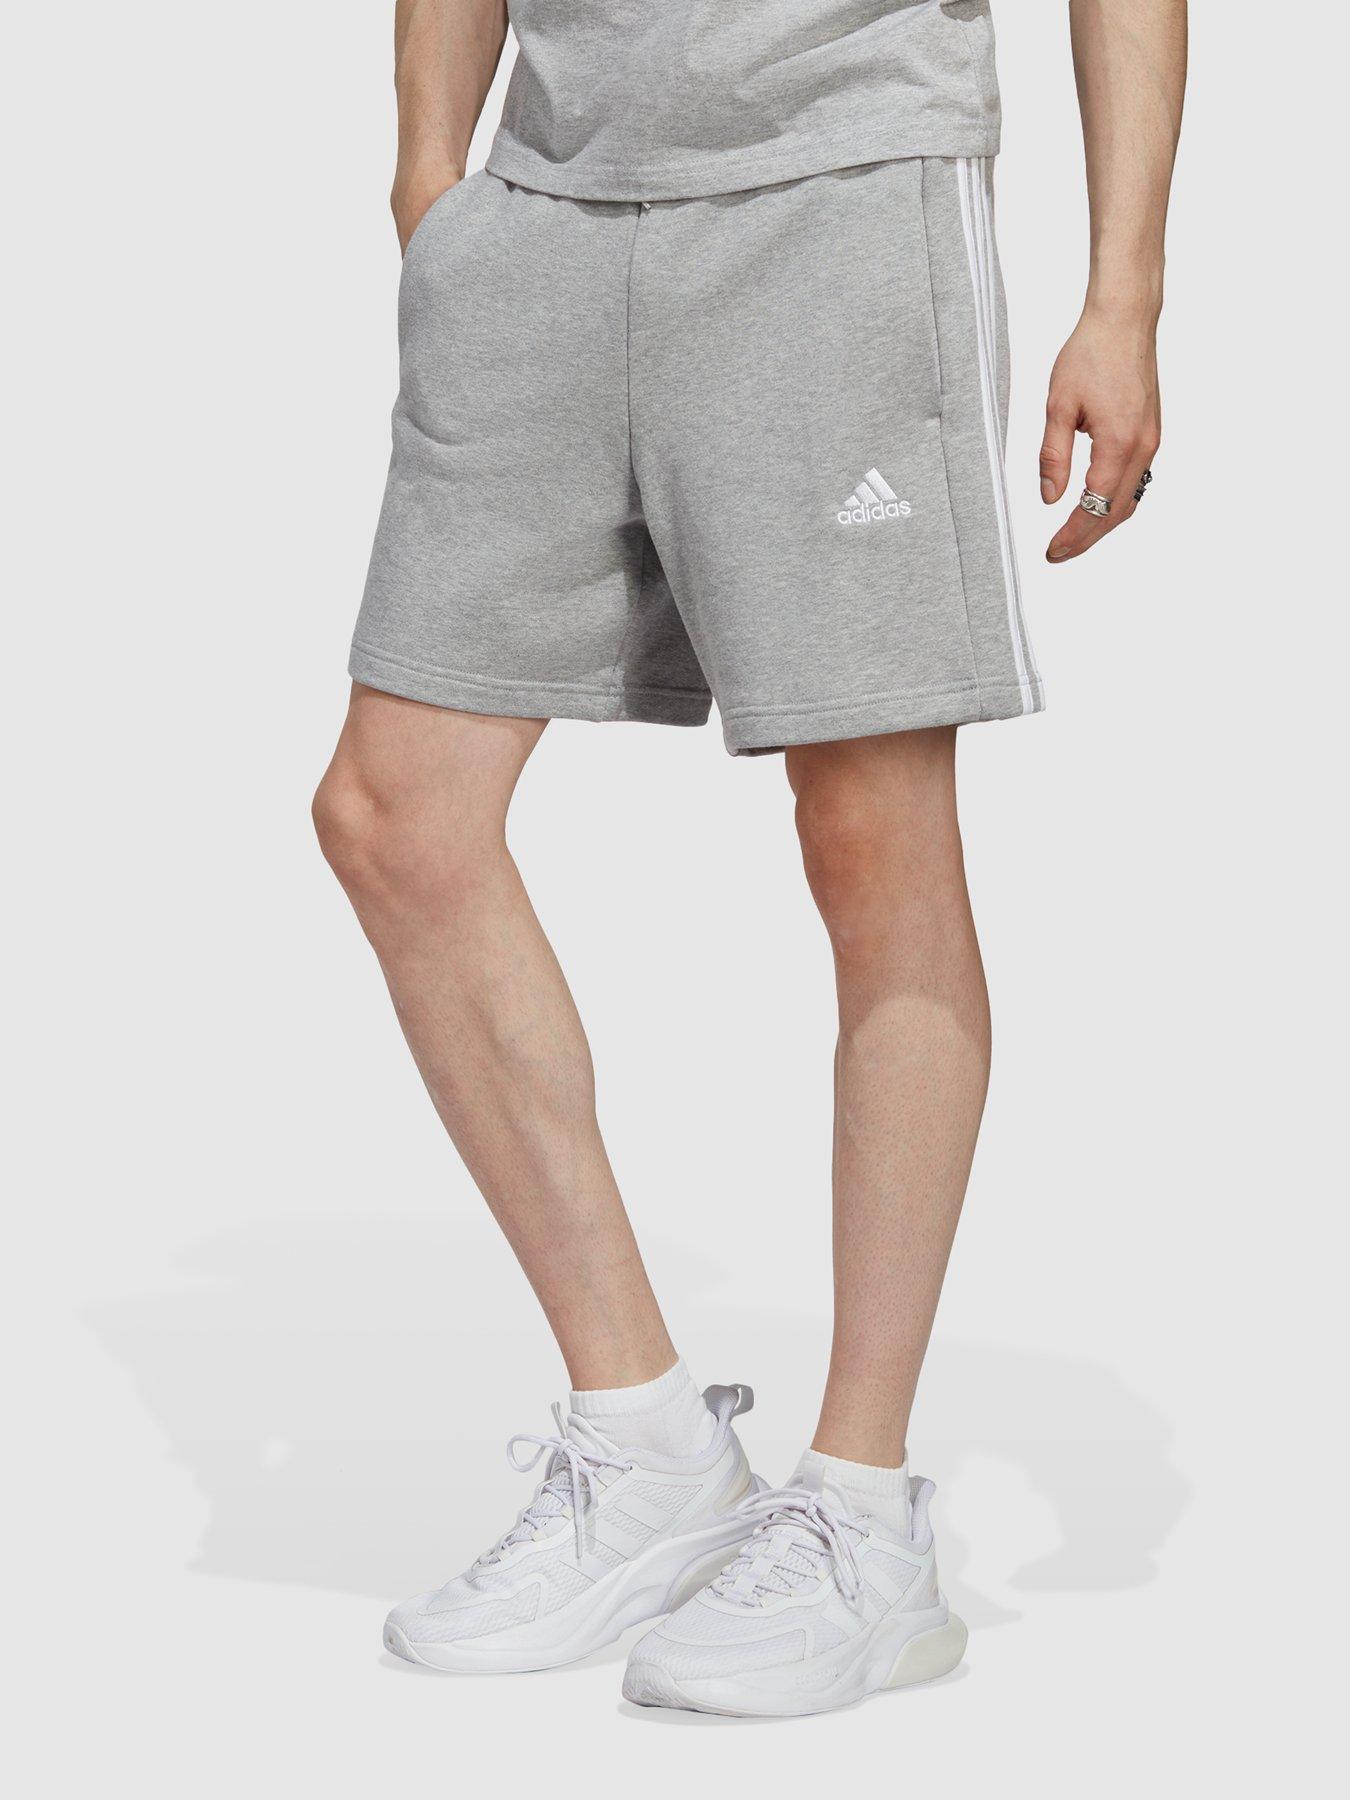 Adidas Shorts, Men's Sportswear